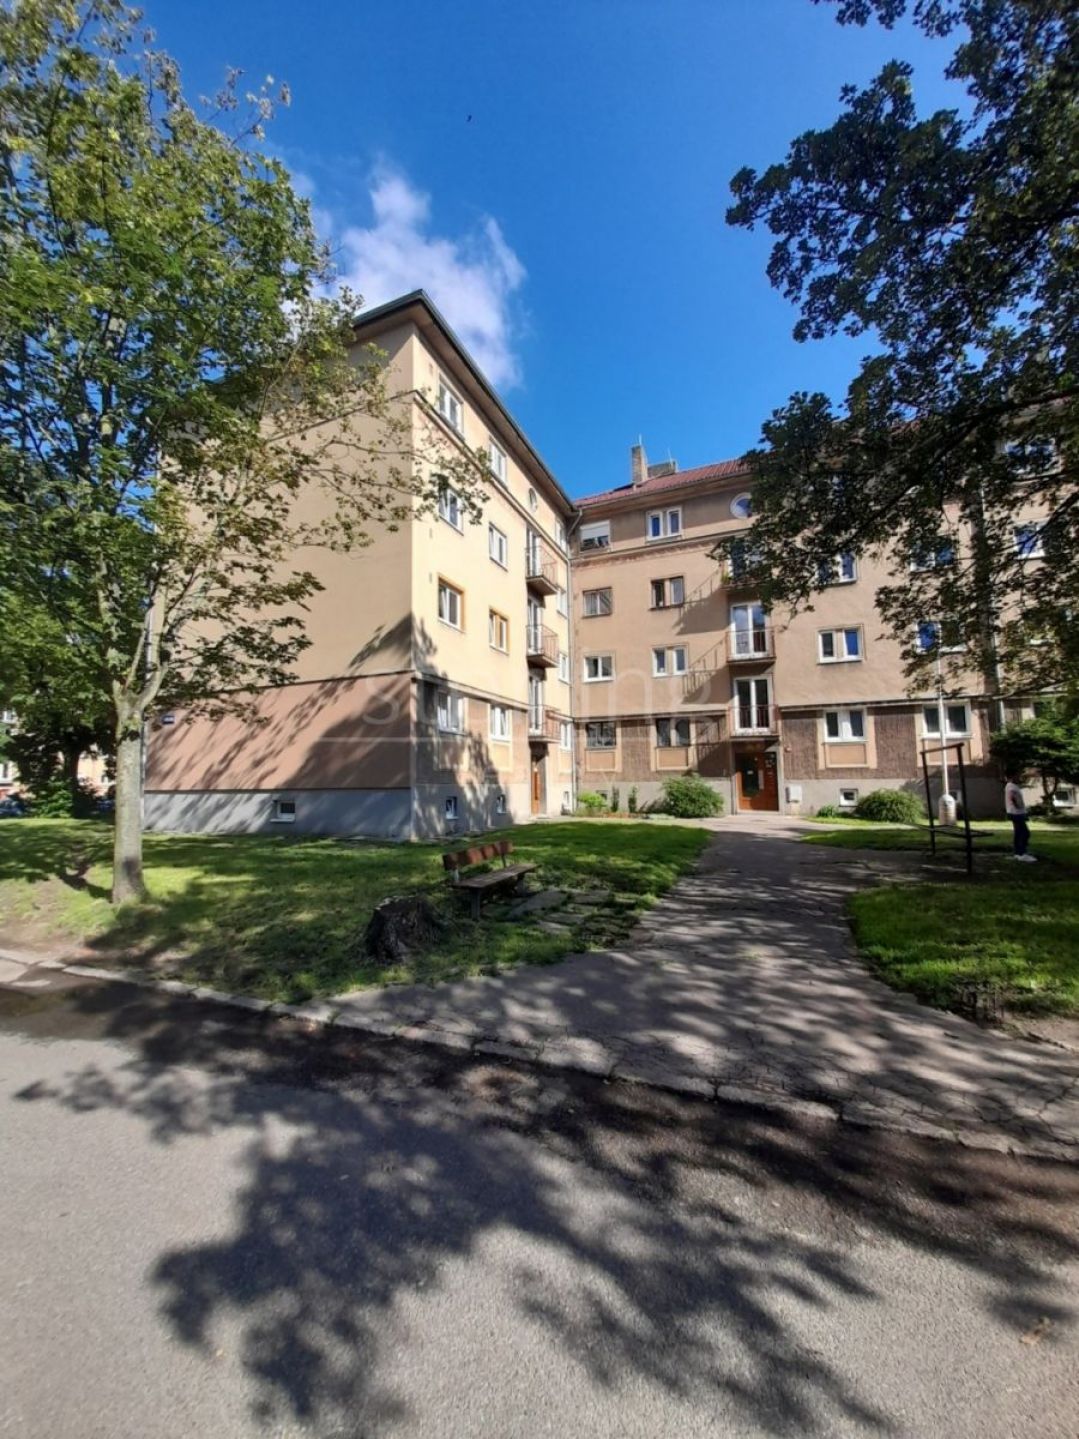 Prodej bytu 2+1, 56 m2, Kladno-Kročehlavy, ul. Jaroslava Foglara, 1.NP, cihla, sklep, OV, obrázek č. 1